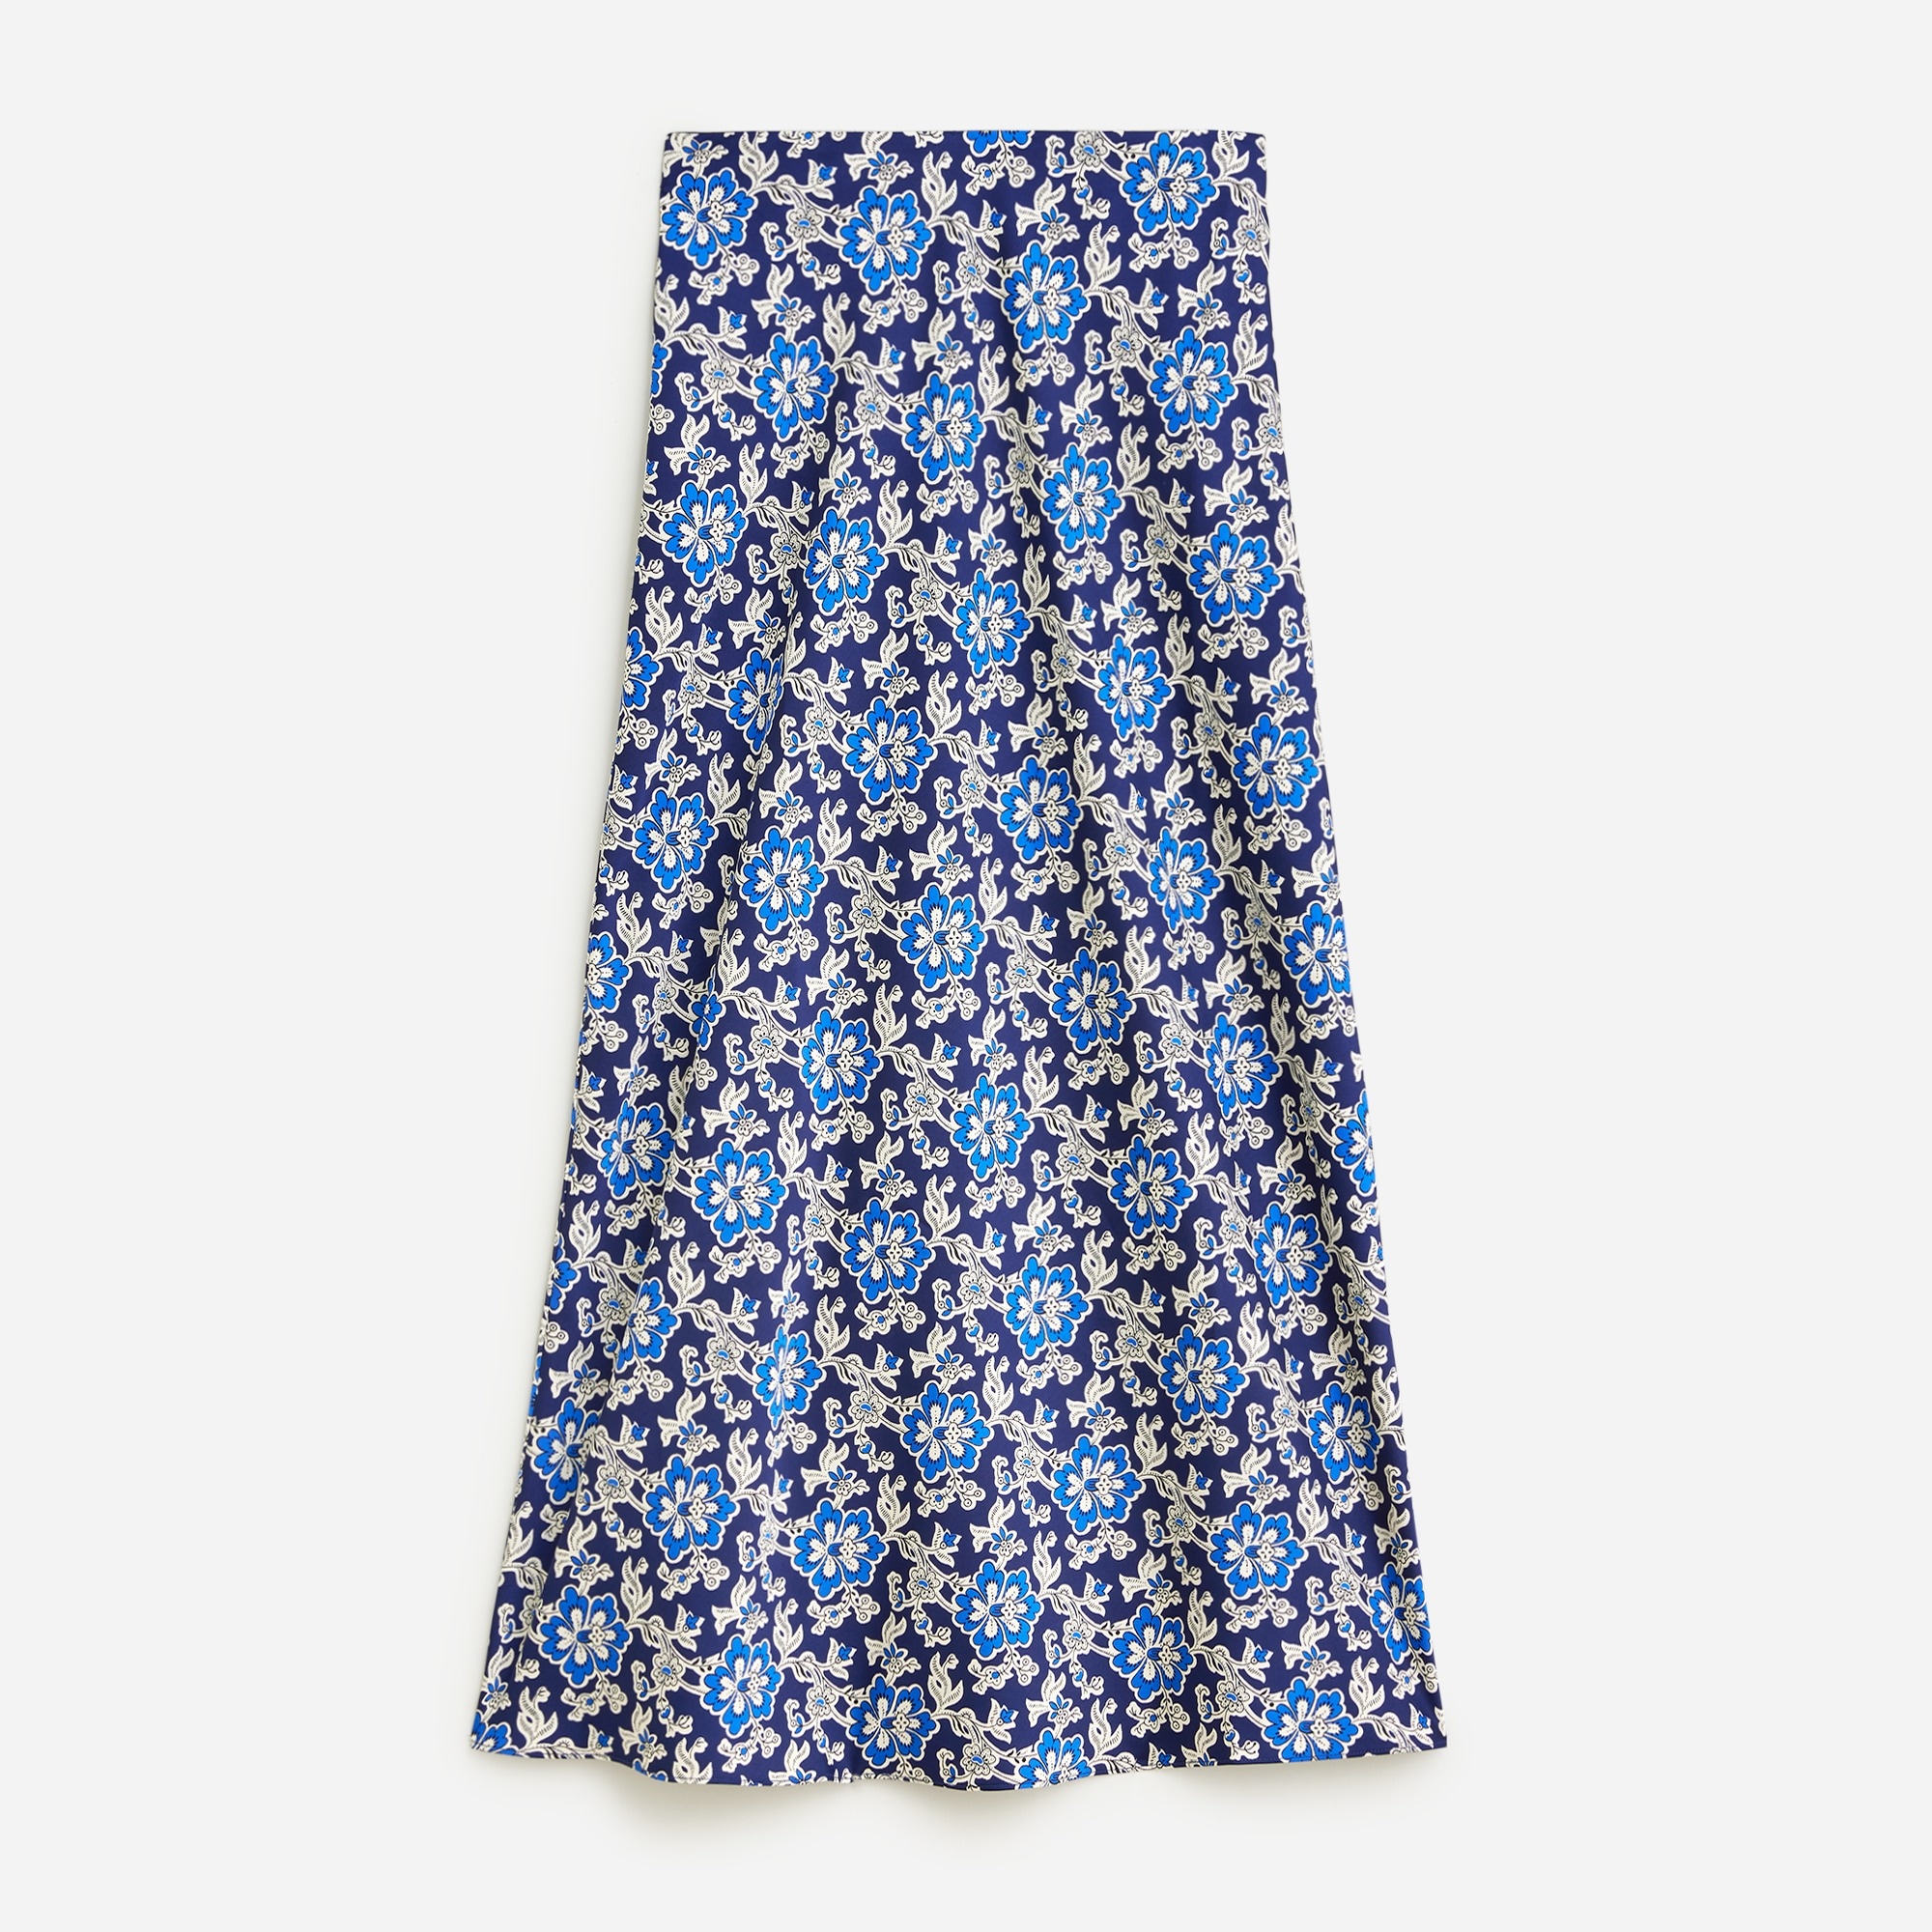  Gwyneth slip skirt in floral luster charmeuse